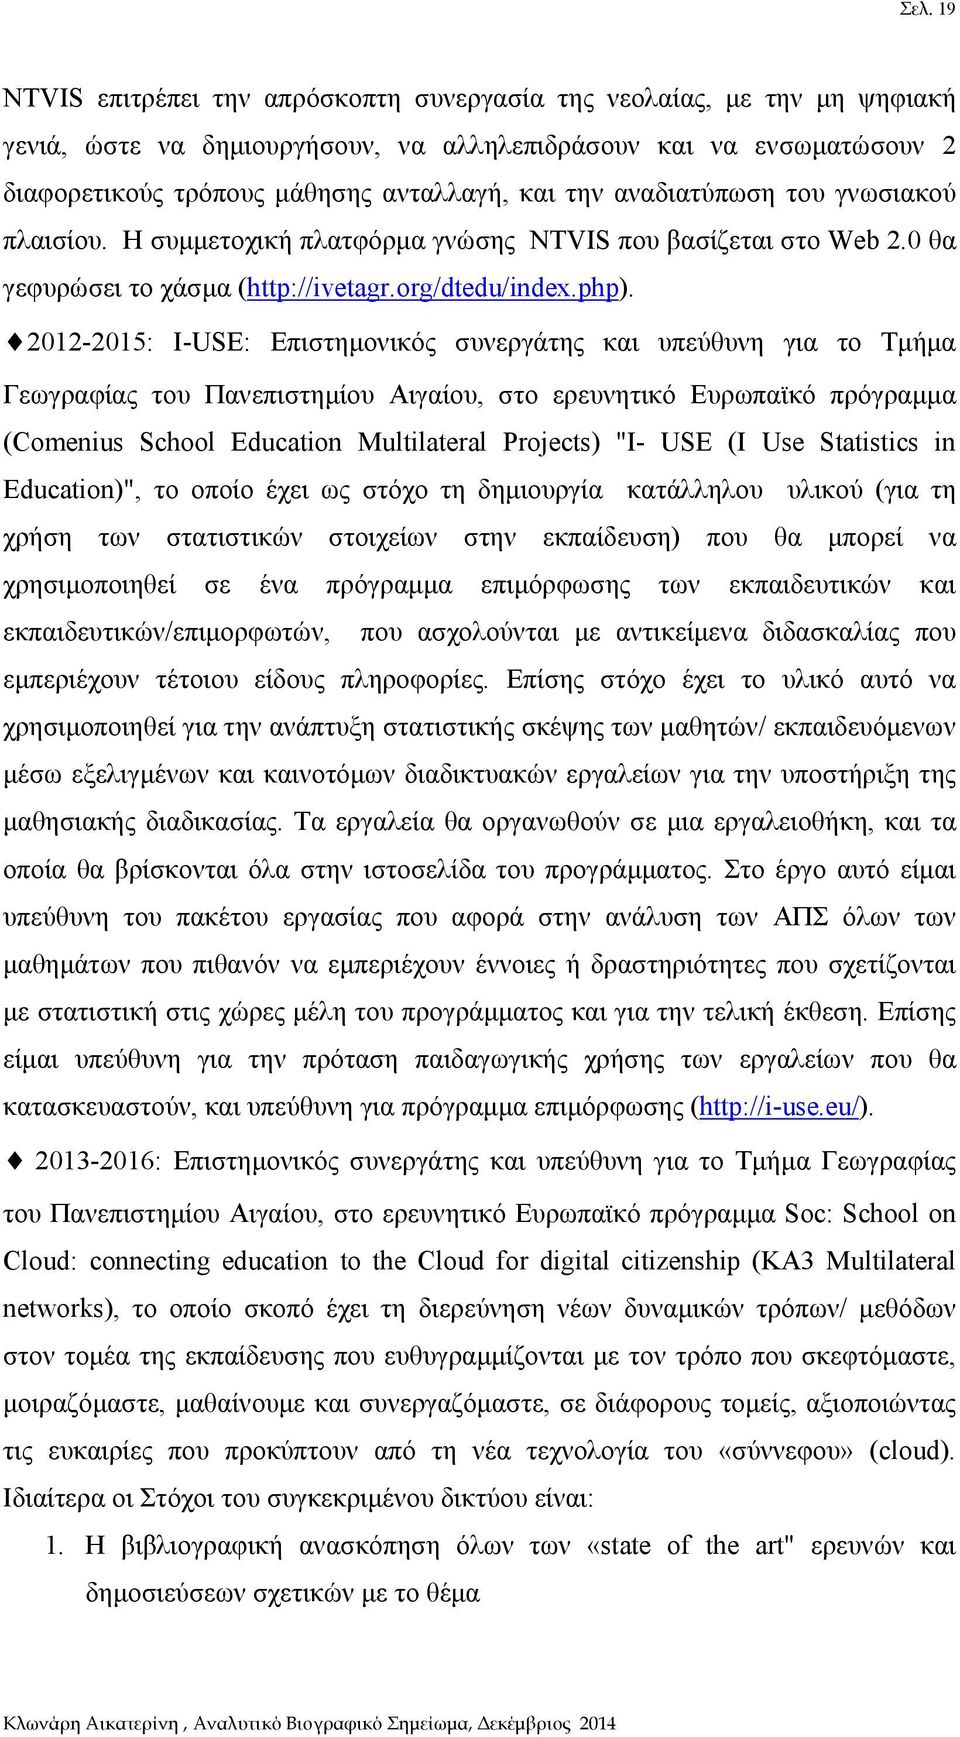 2012-2015: I-USE: Επιστημονικός συνεργάτης και υπεύθυνη για το Τμήμα Γεωγραφίας του Πανεπιστημίου Αιγαίου, στο ερευνητικό Ευρωπαϊκό πρόγραμμα (Comenius School Education Multilateral Projects) "I- USE